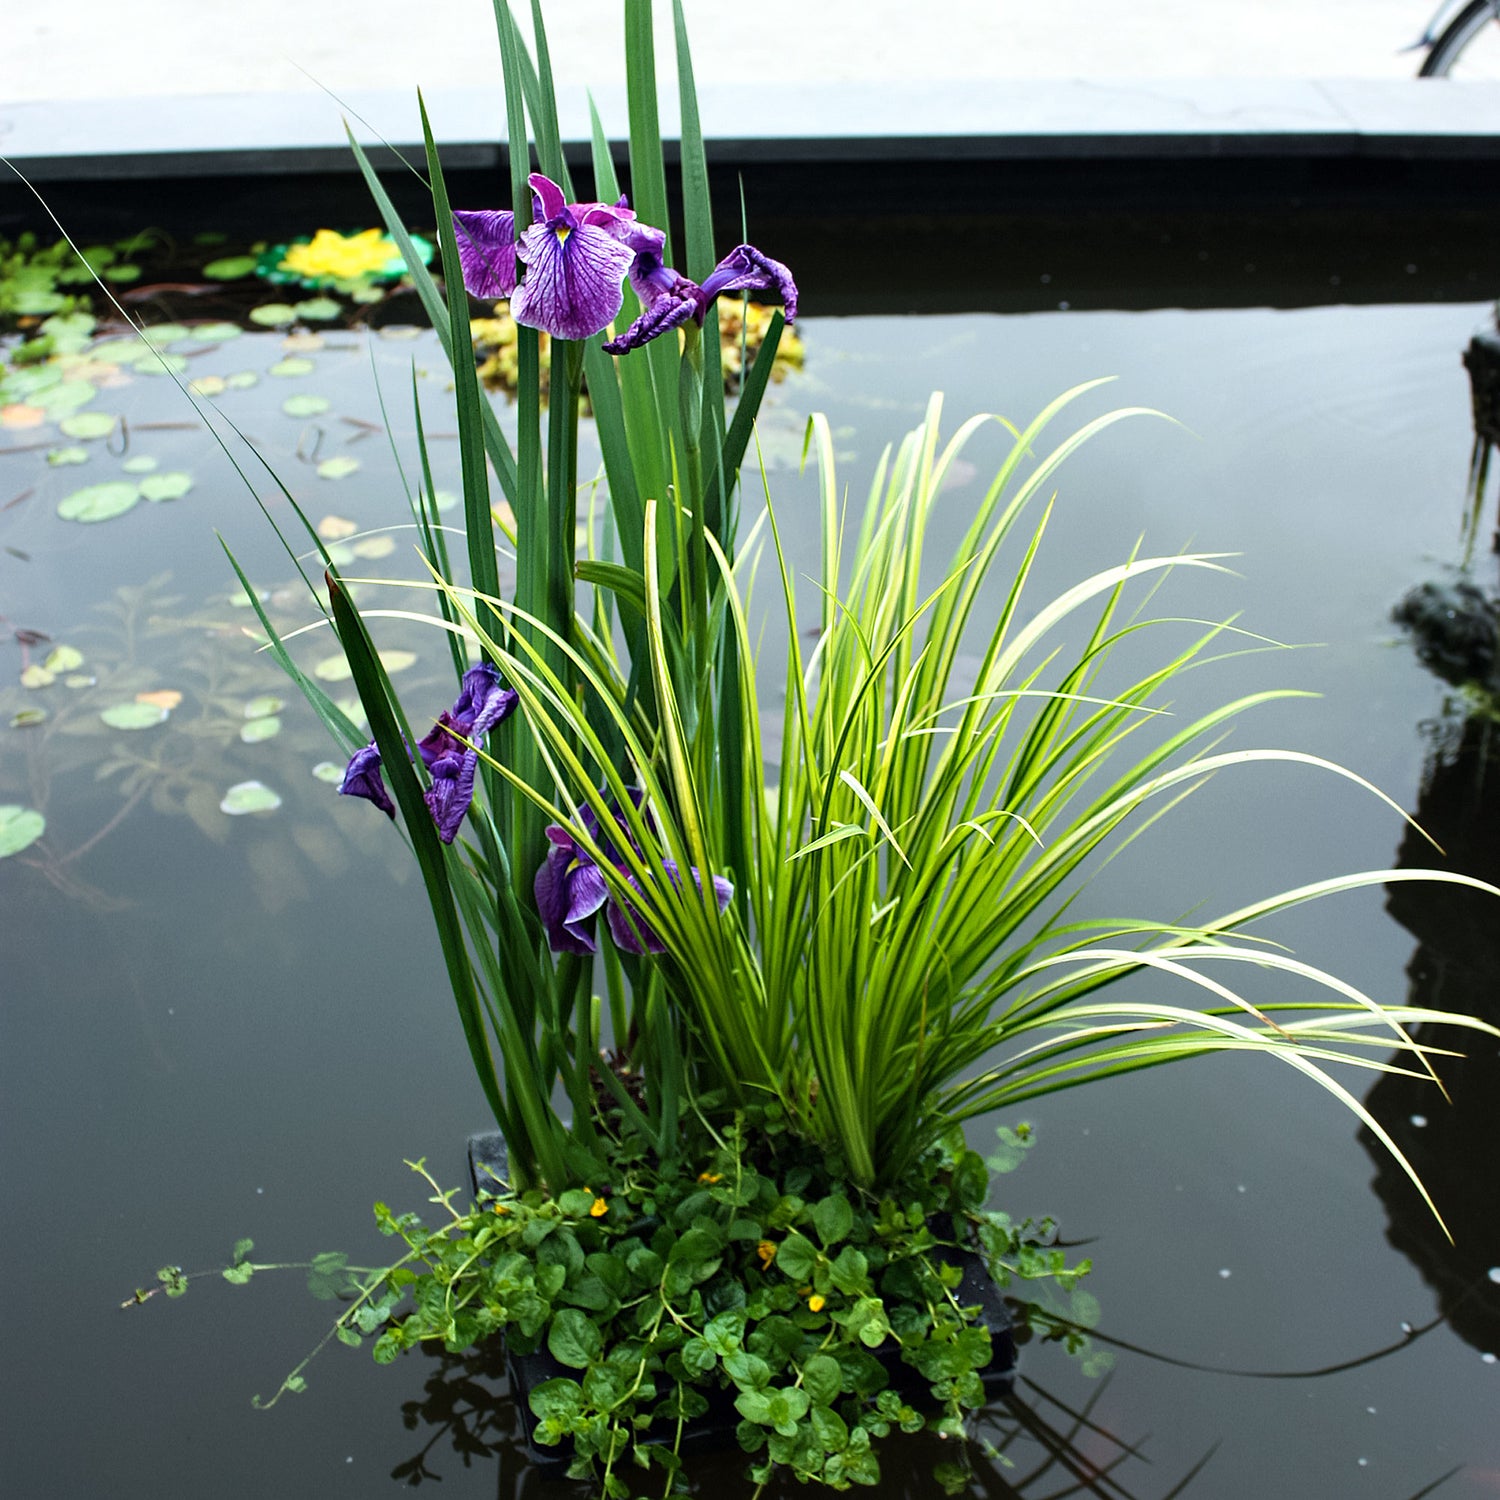 Floating plants